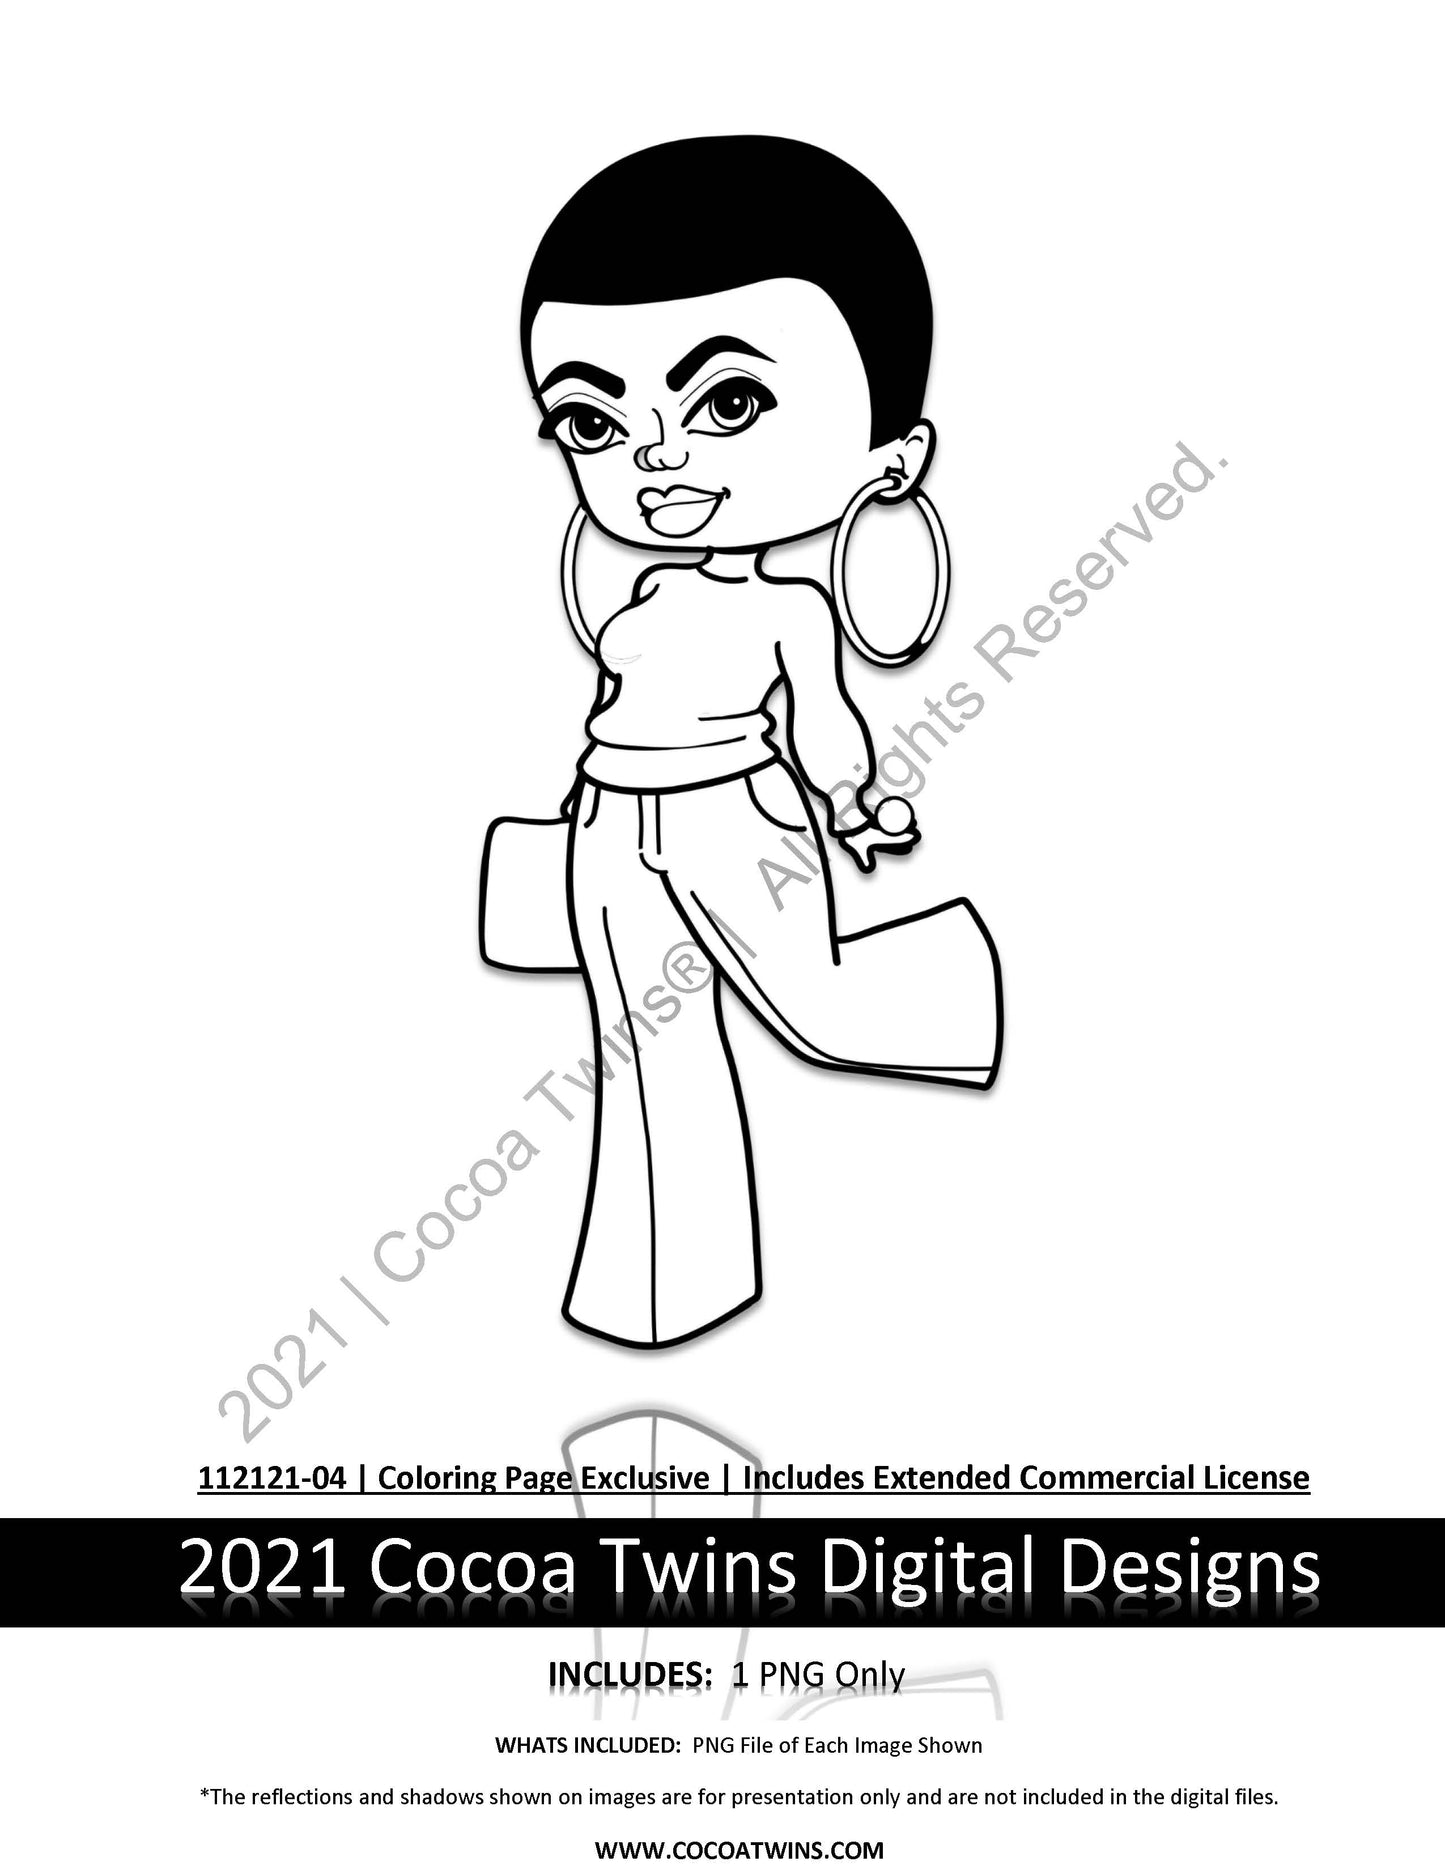 112121-04  | Limited Release Exclusive Image Set | 2021 | Exclusive Colorable Digi Dolls